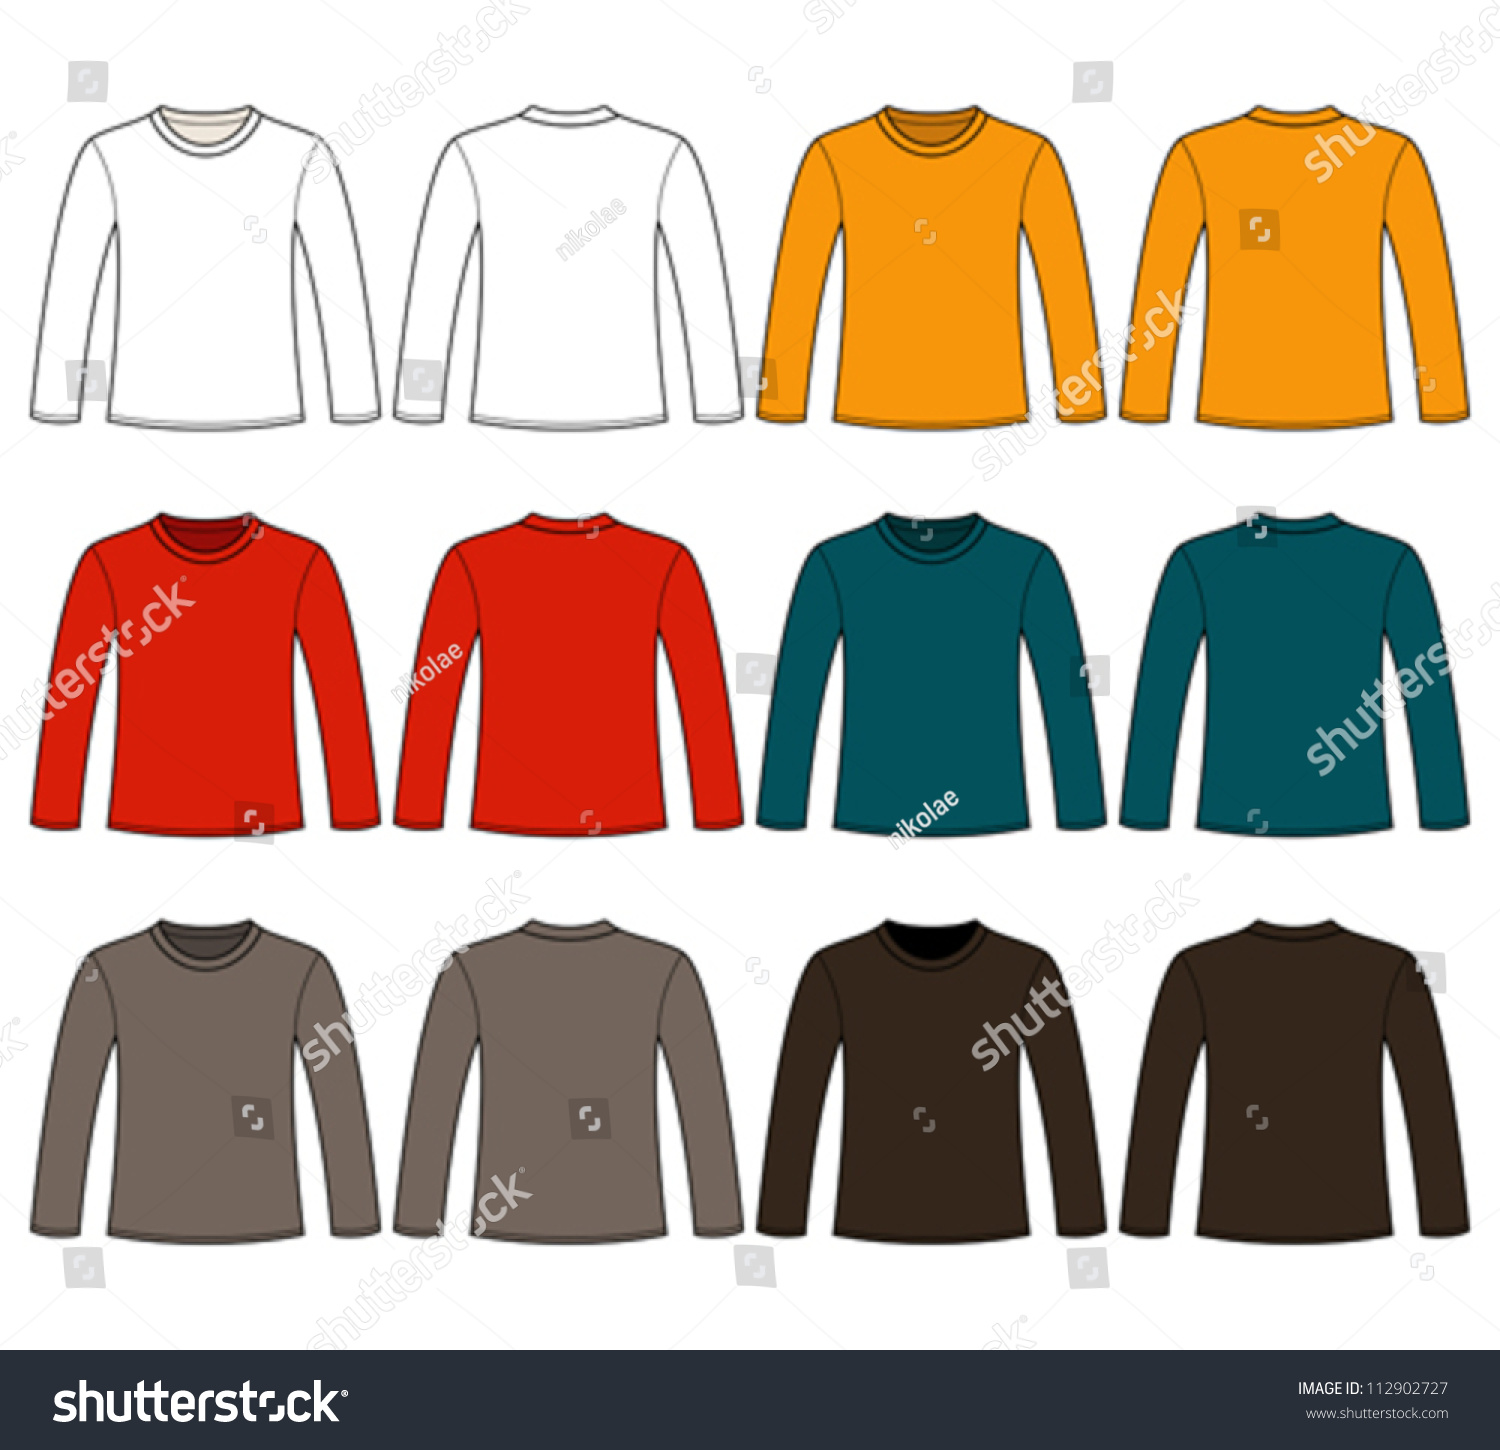 Long-Sleeved T-Shirt Template Stock Vector Illustration 112902727 ...